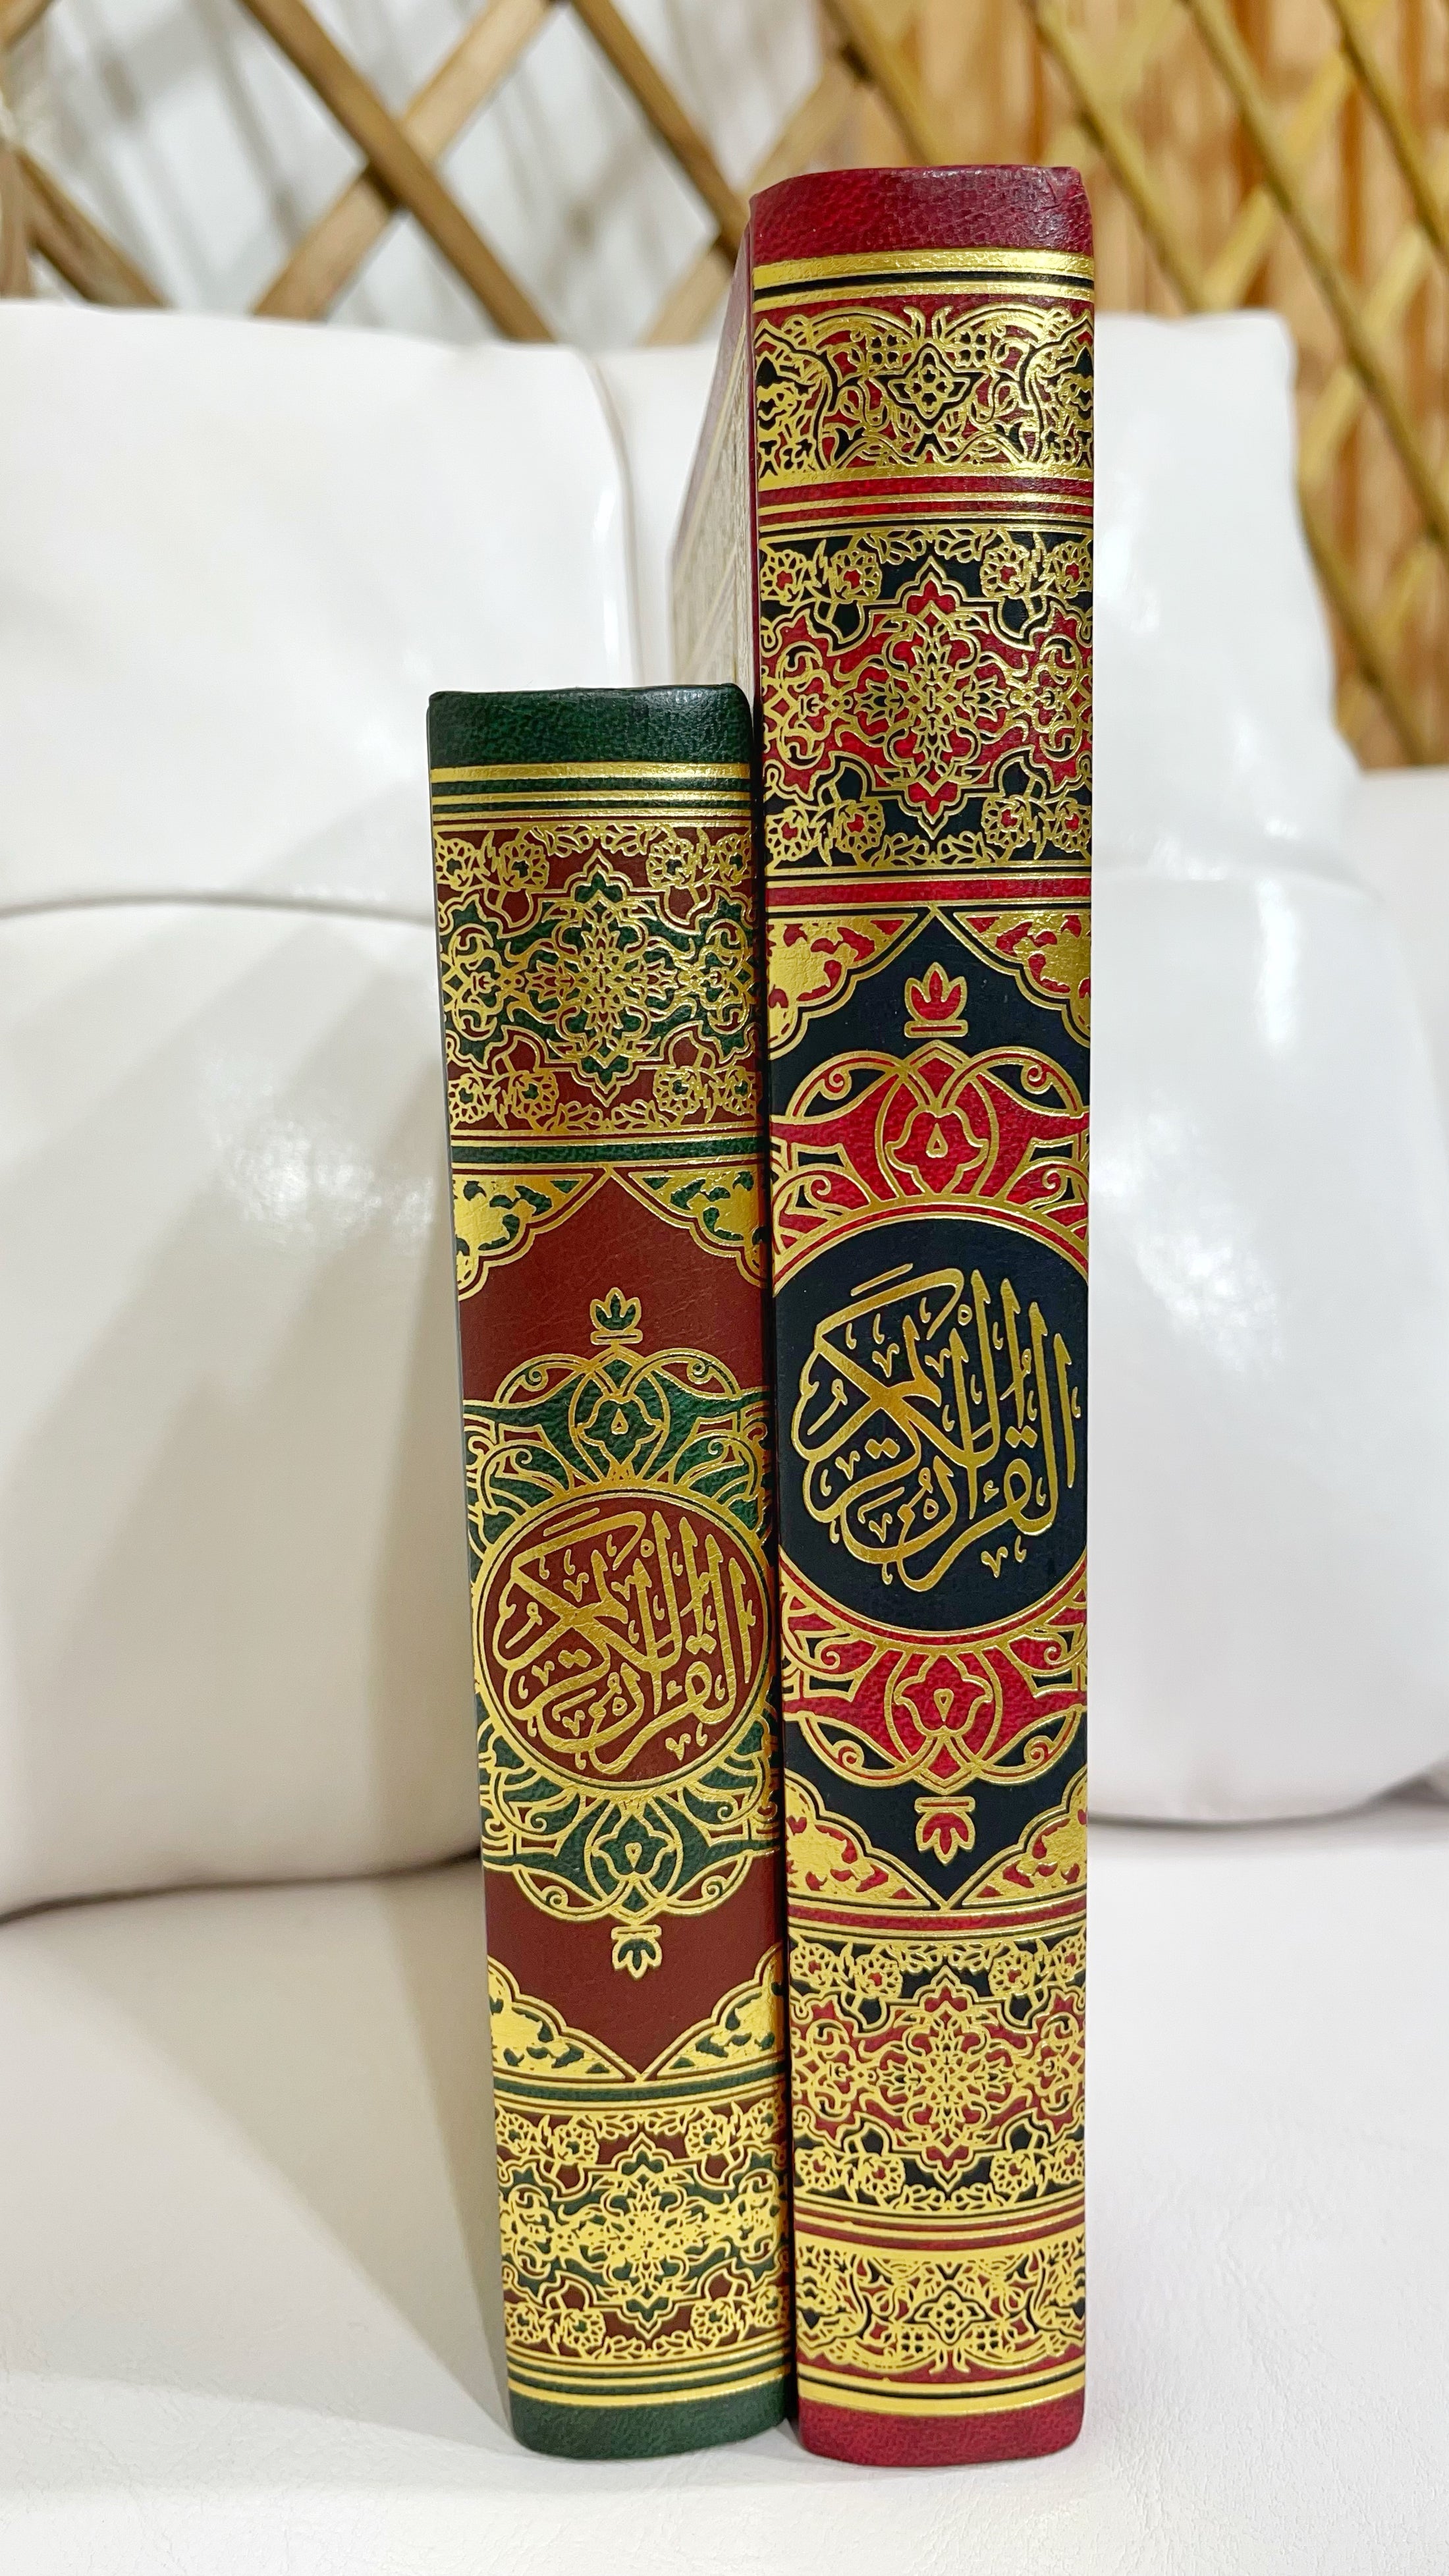 Corano warsh - Hijab Paradise - libro sacro - corano in arabo